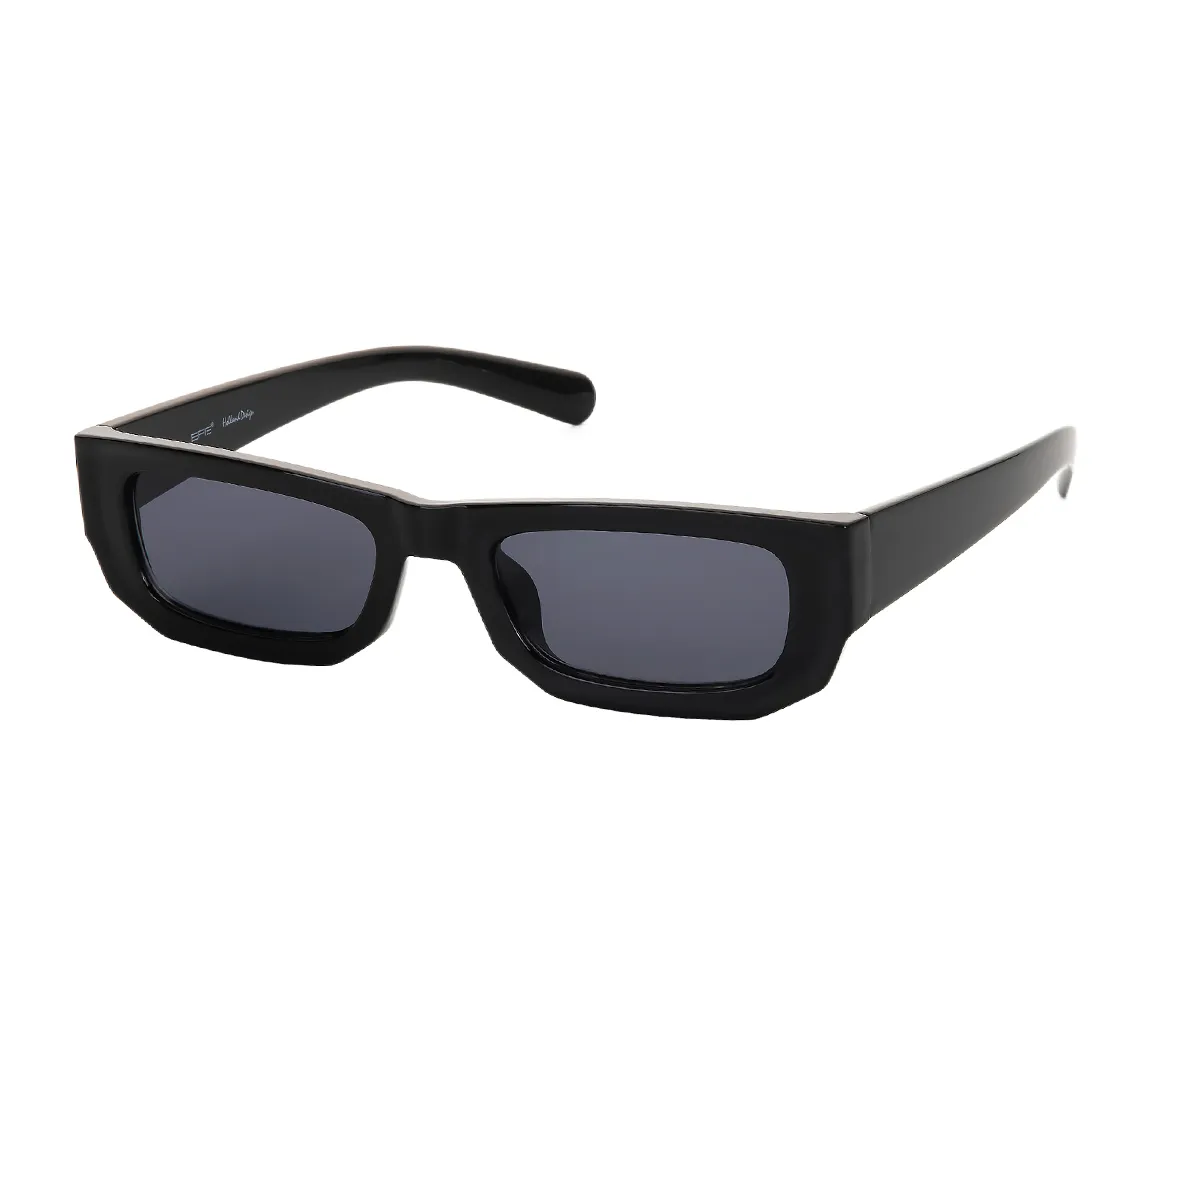 Buffay - Rectangle Black Sunglasses for Women